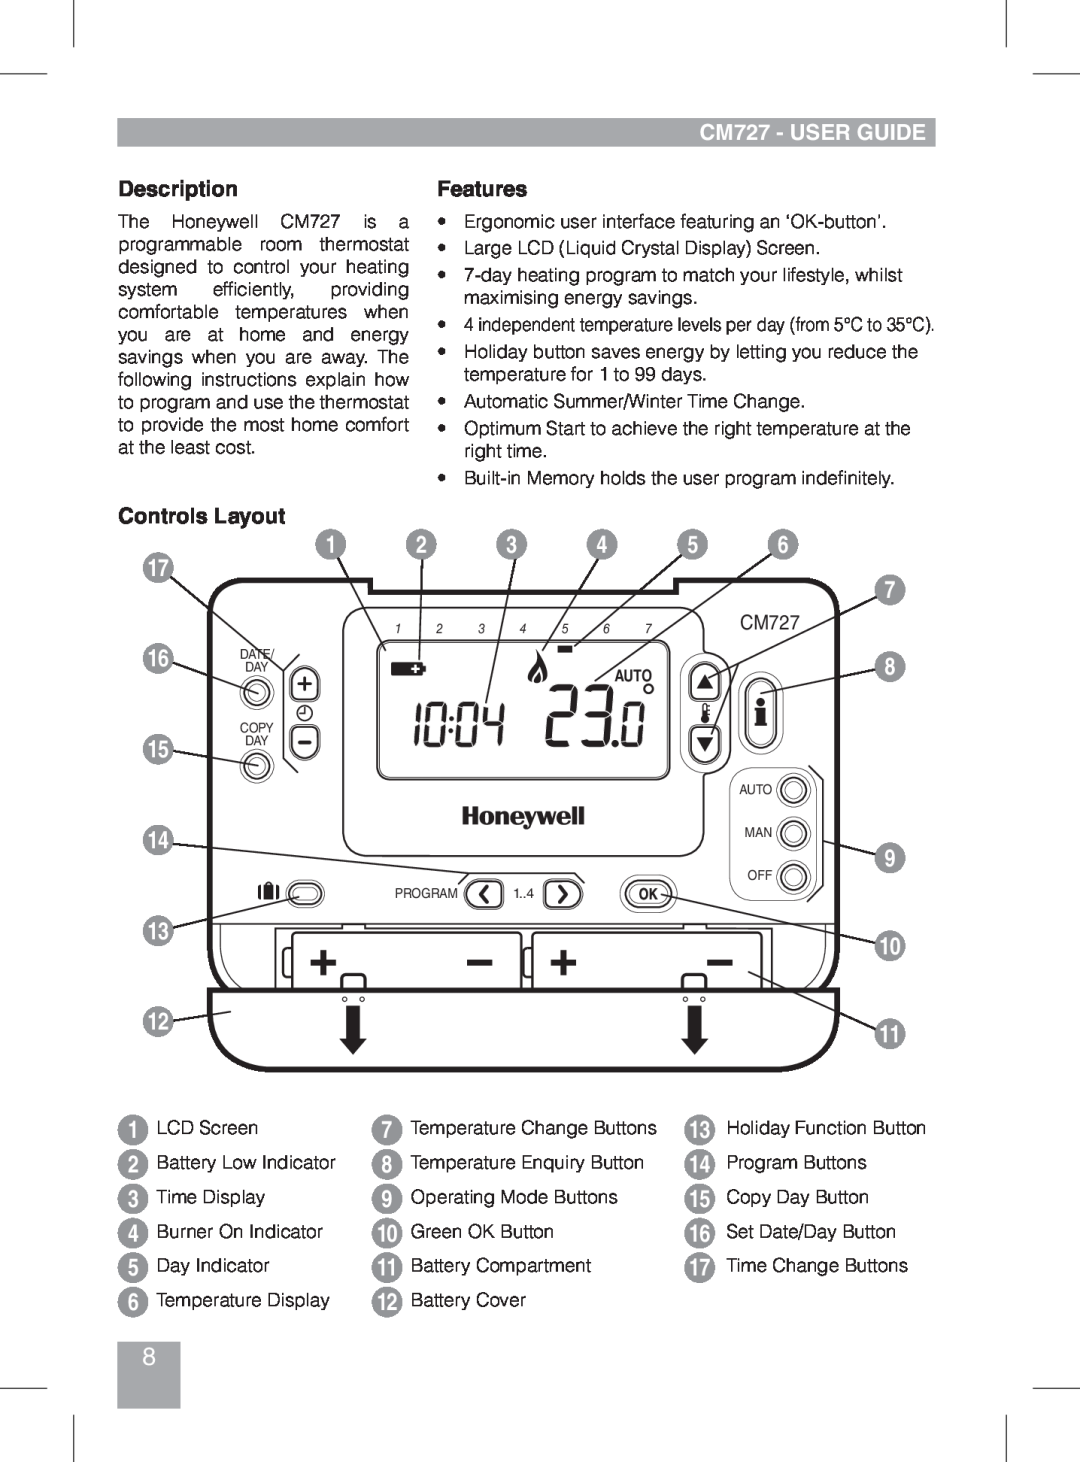 Honeywell CM721 manual CM727 - USER GUIDE, Description, Controls Layout, Features 